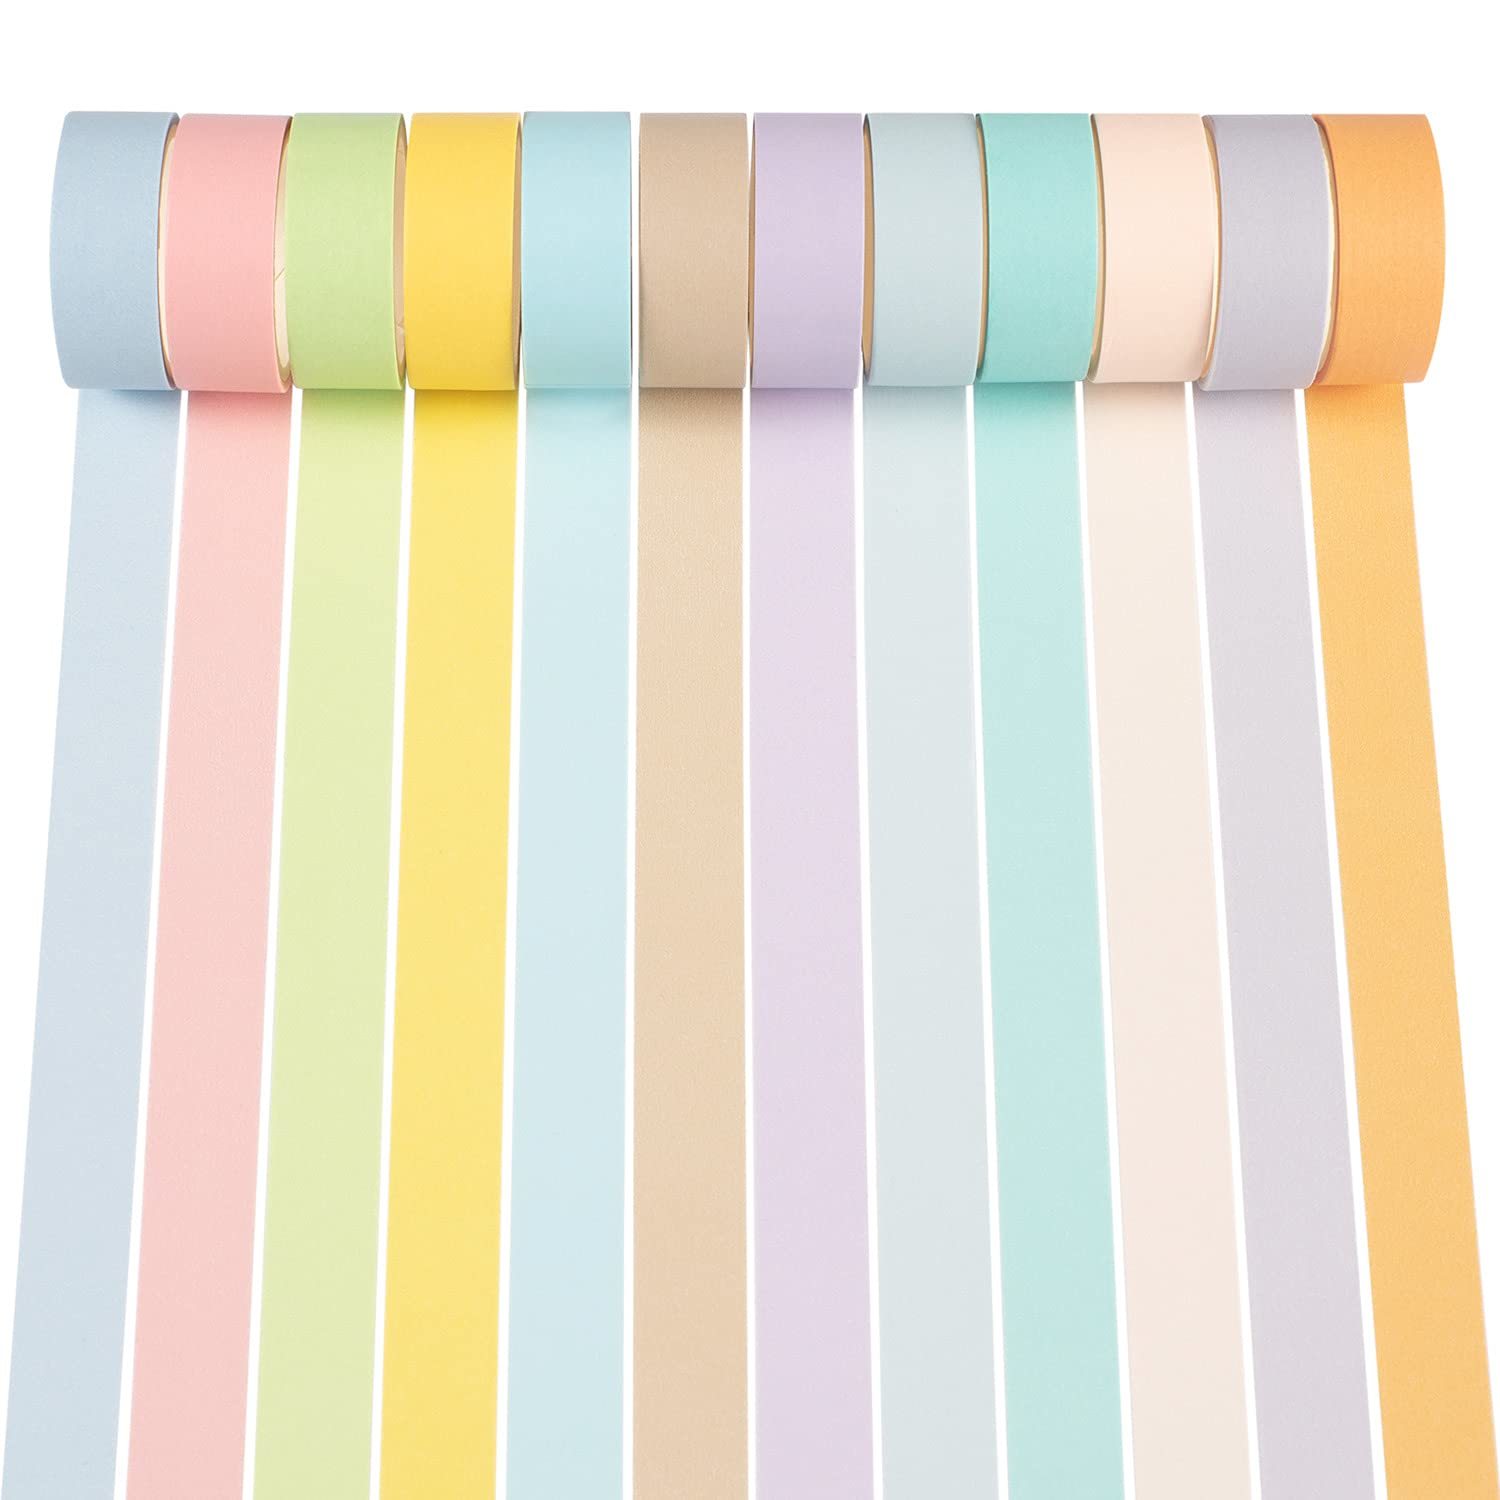 Primary image for Pastal Colors Washi Tape Set 12 Rolls Macaron Decorative Tapes Adhesive Masking 